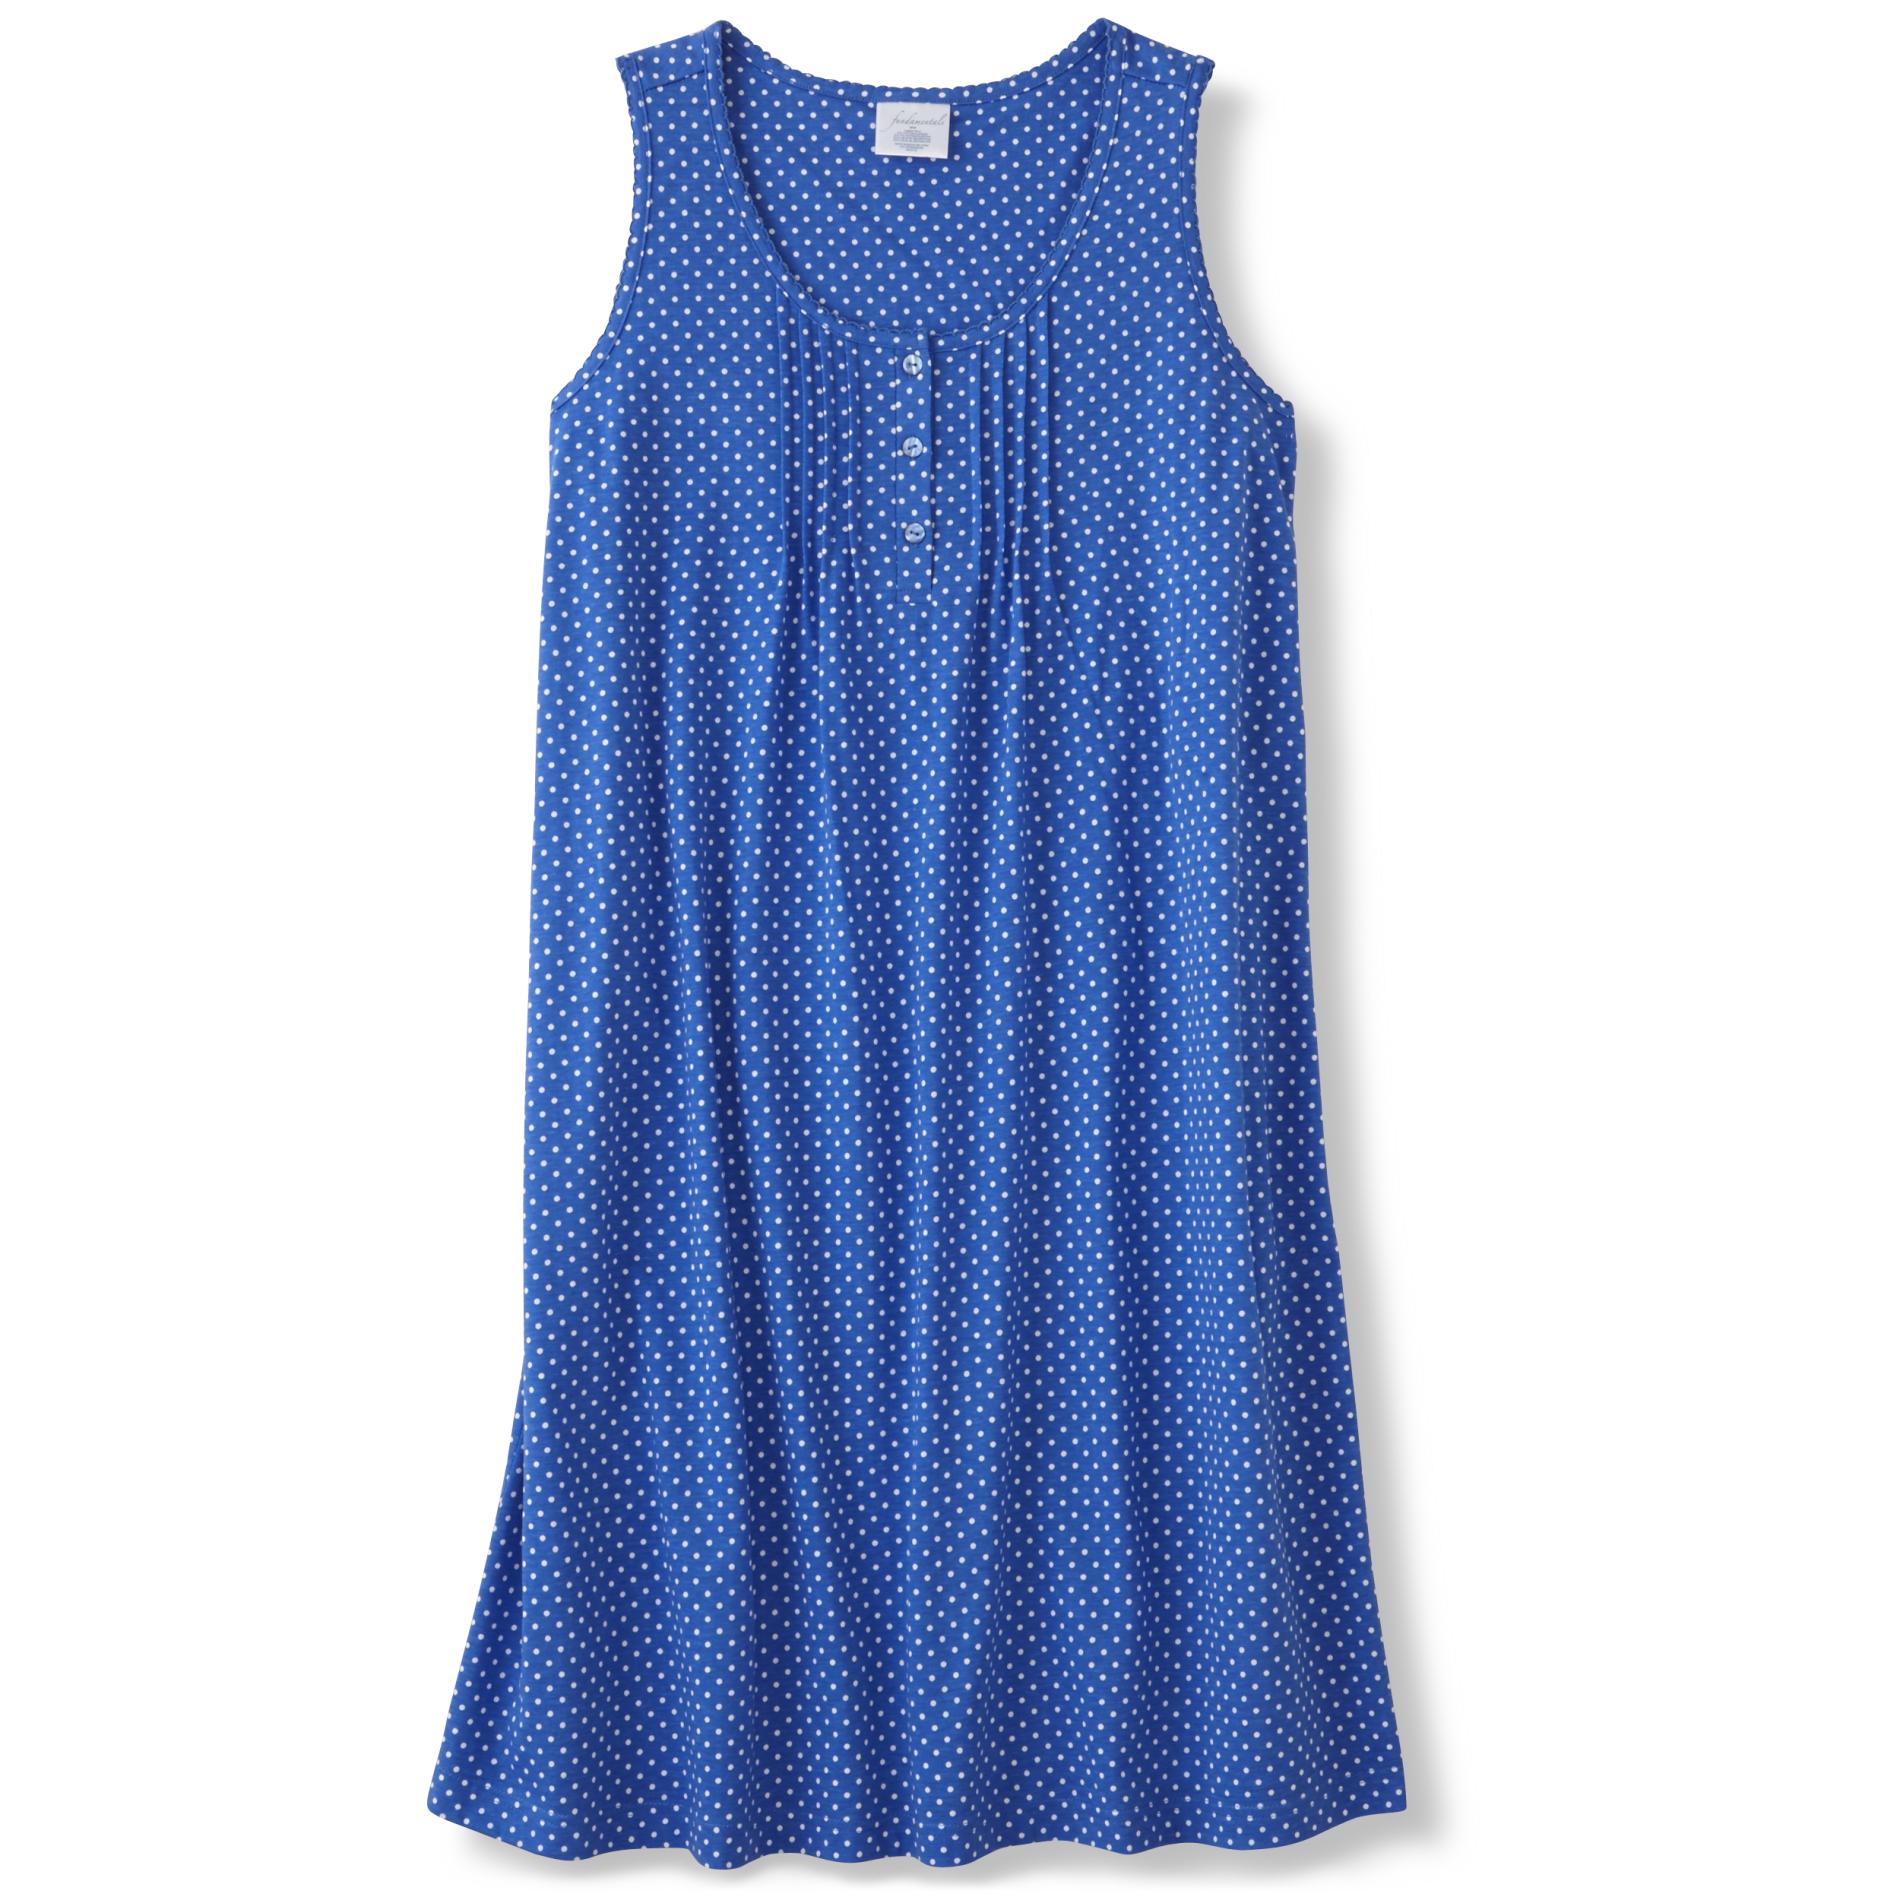 Fundamentals Women's Sleeveless Nightgown - Polka Dots